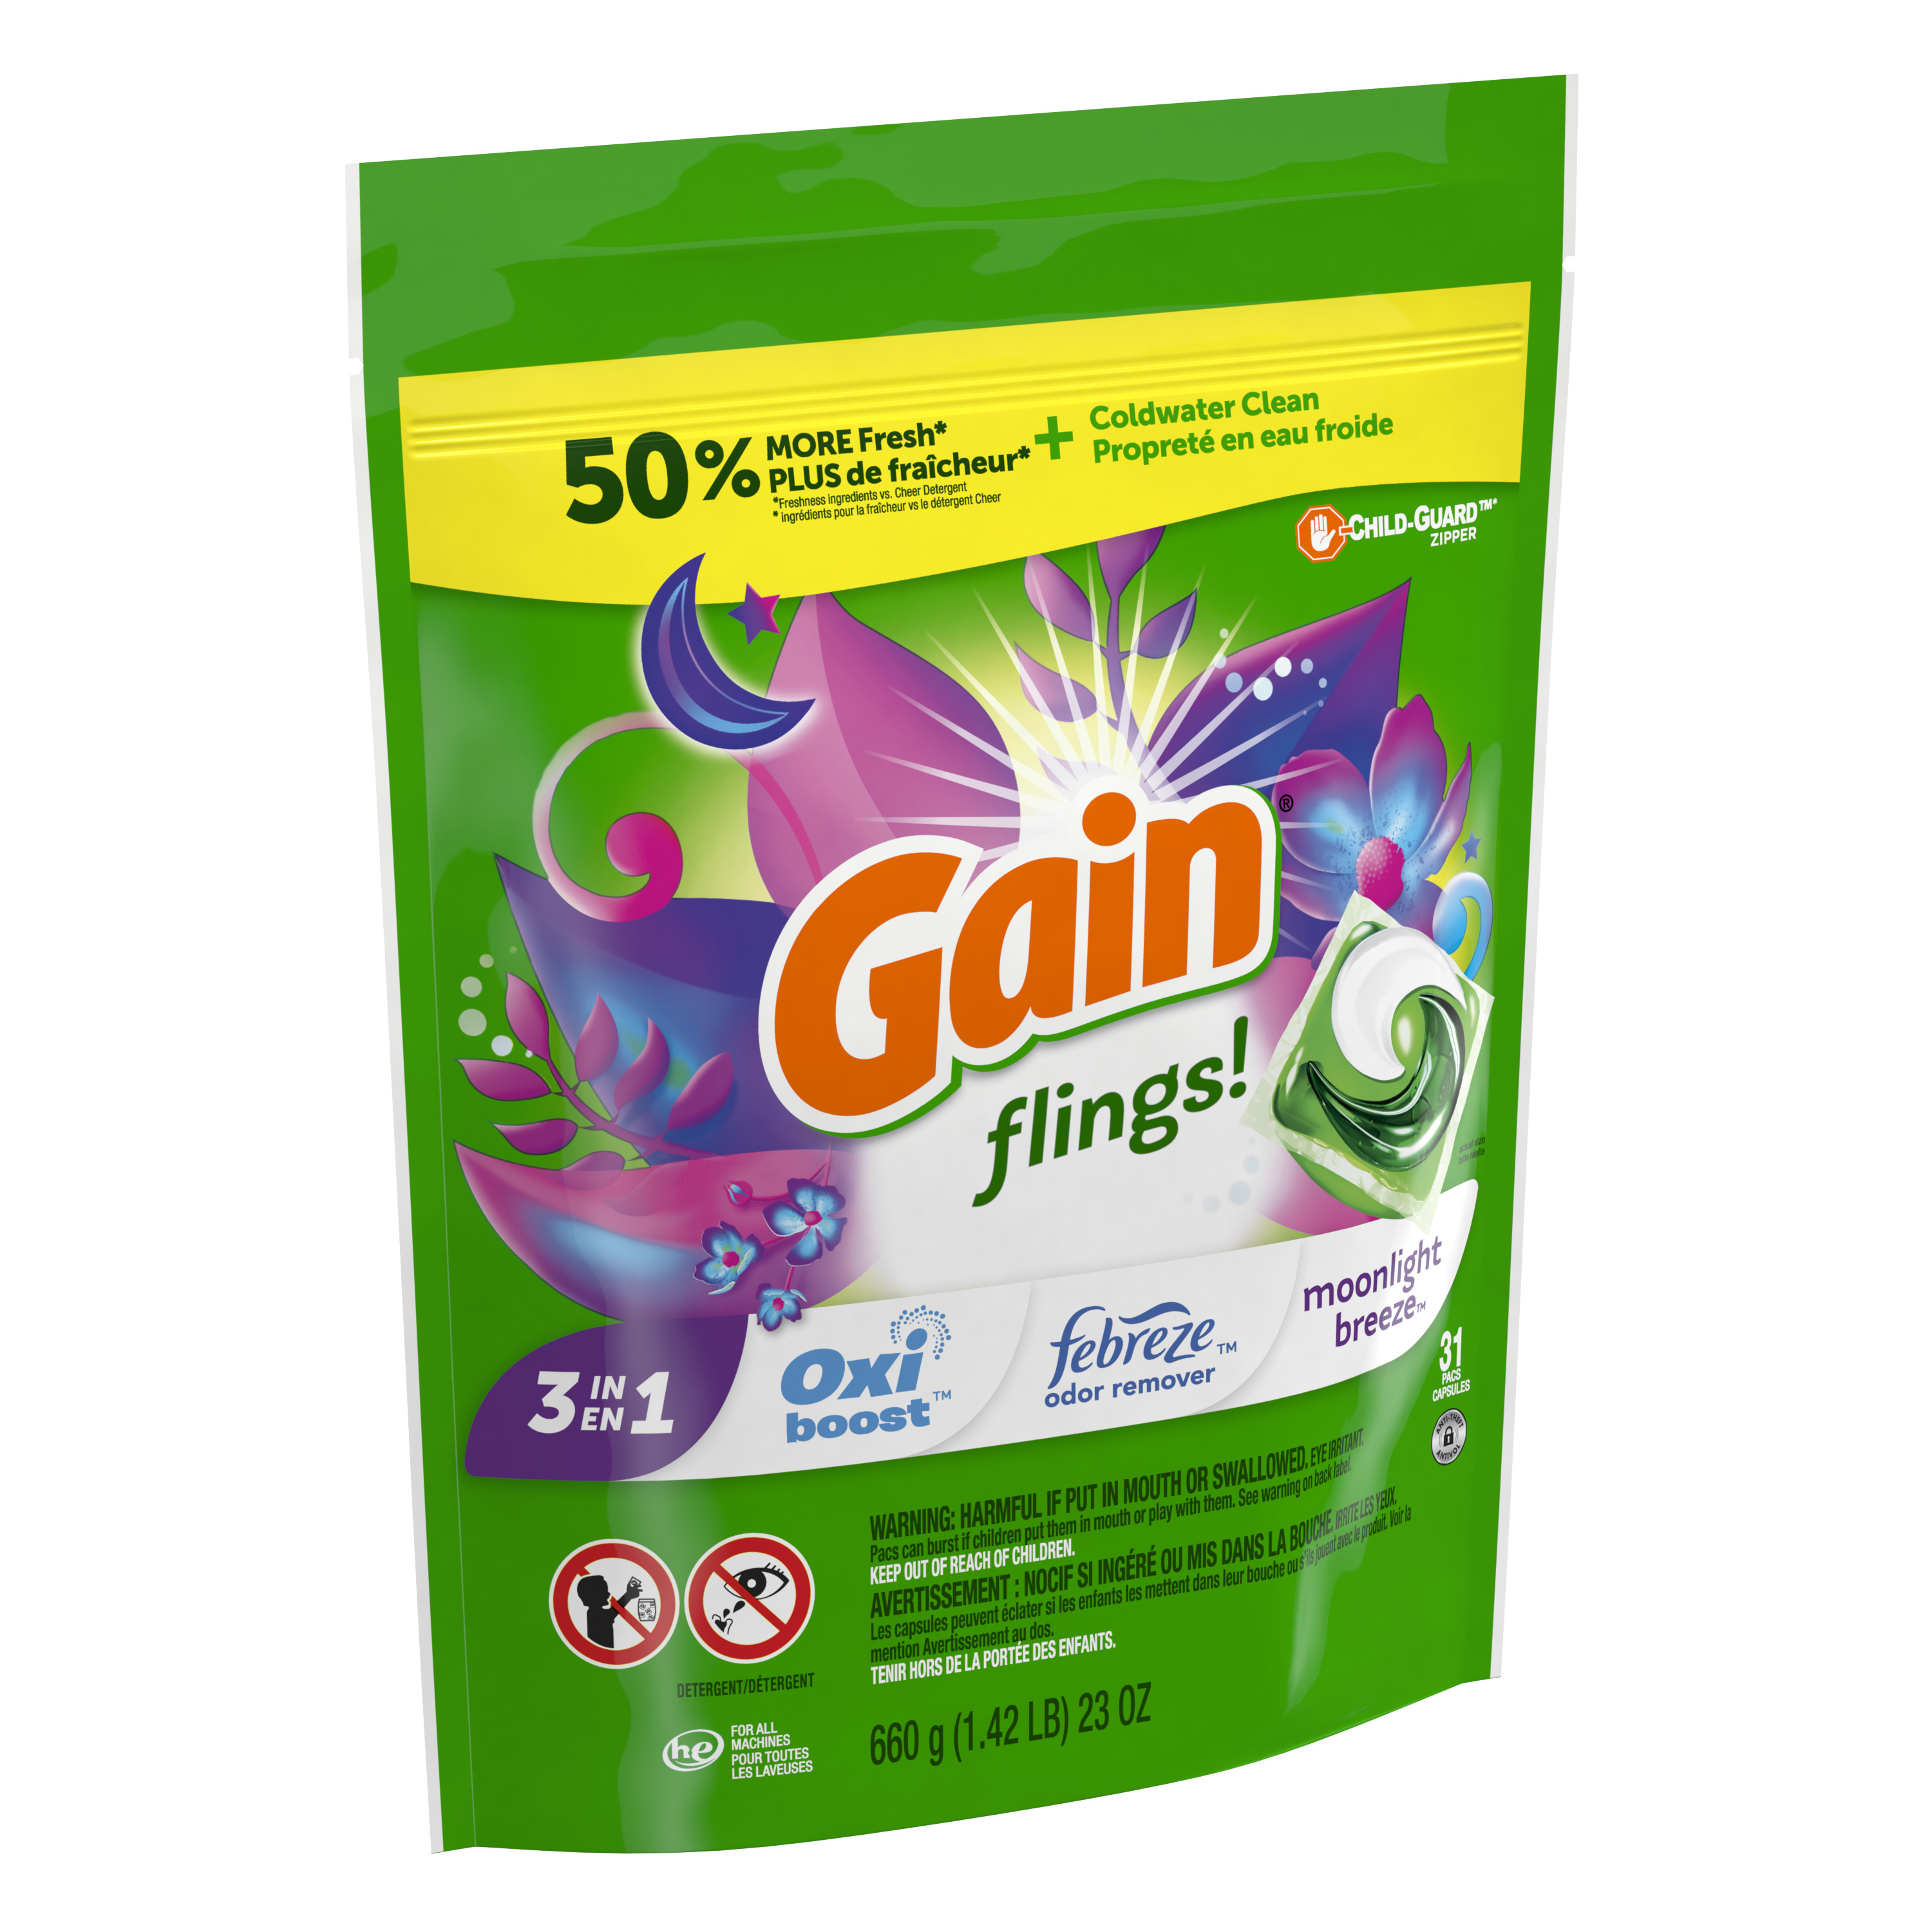 Gain Flings Laundry Detergent Soap Pacs, 31 Ct, Moonlight Breeze - image 2 of 9